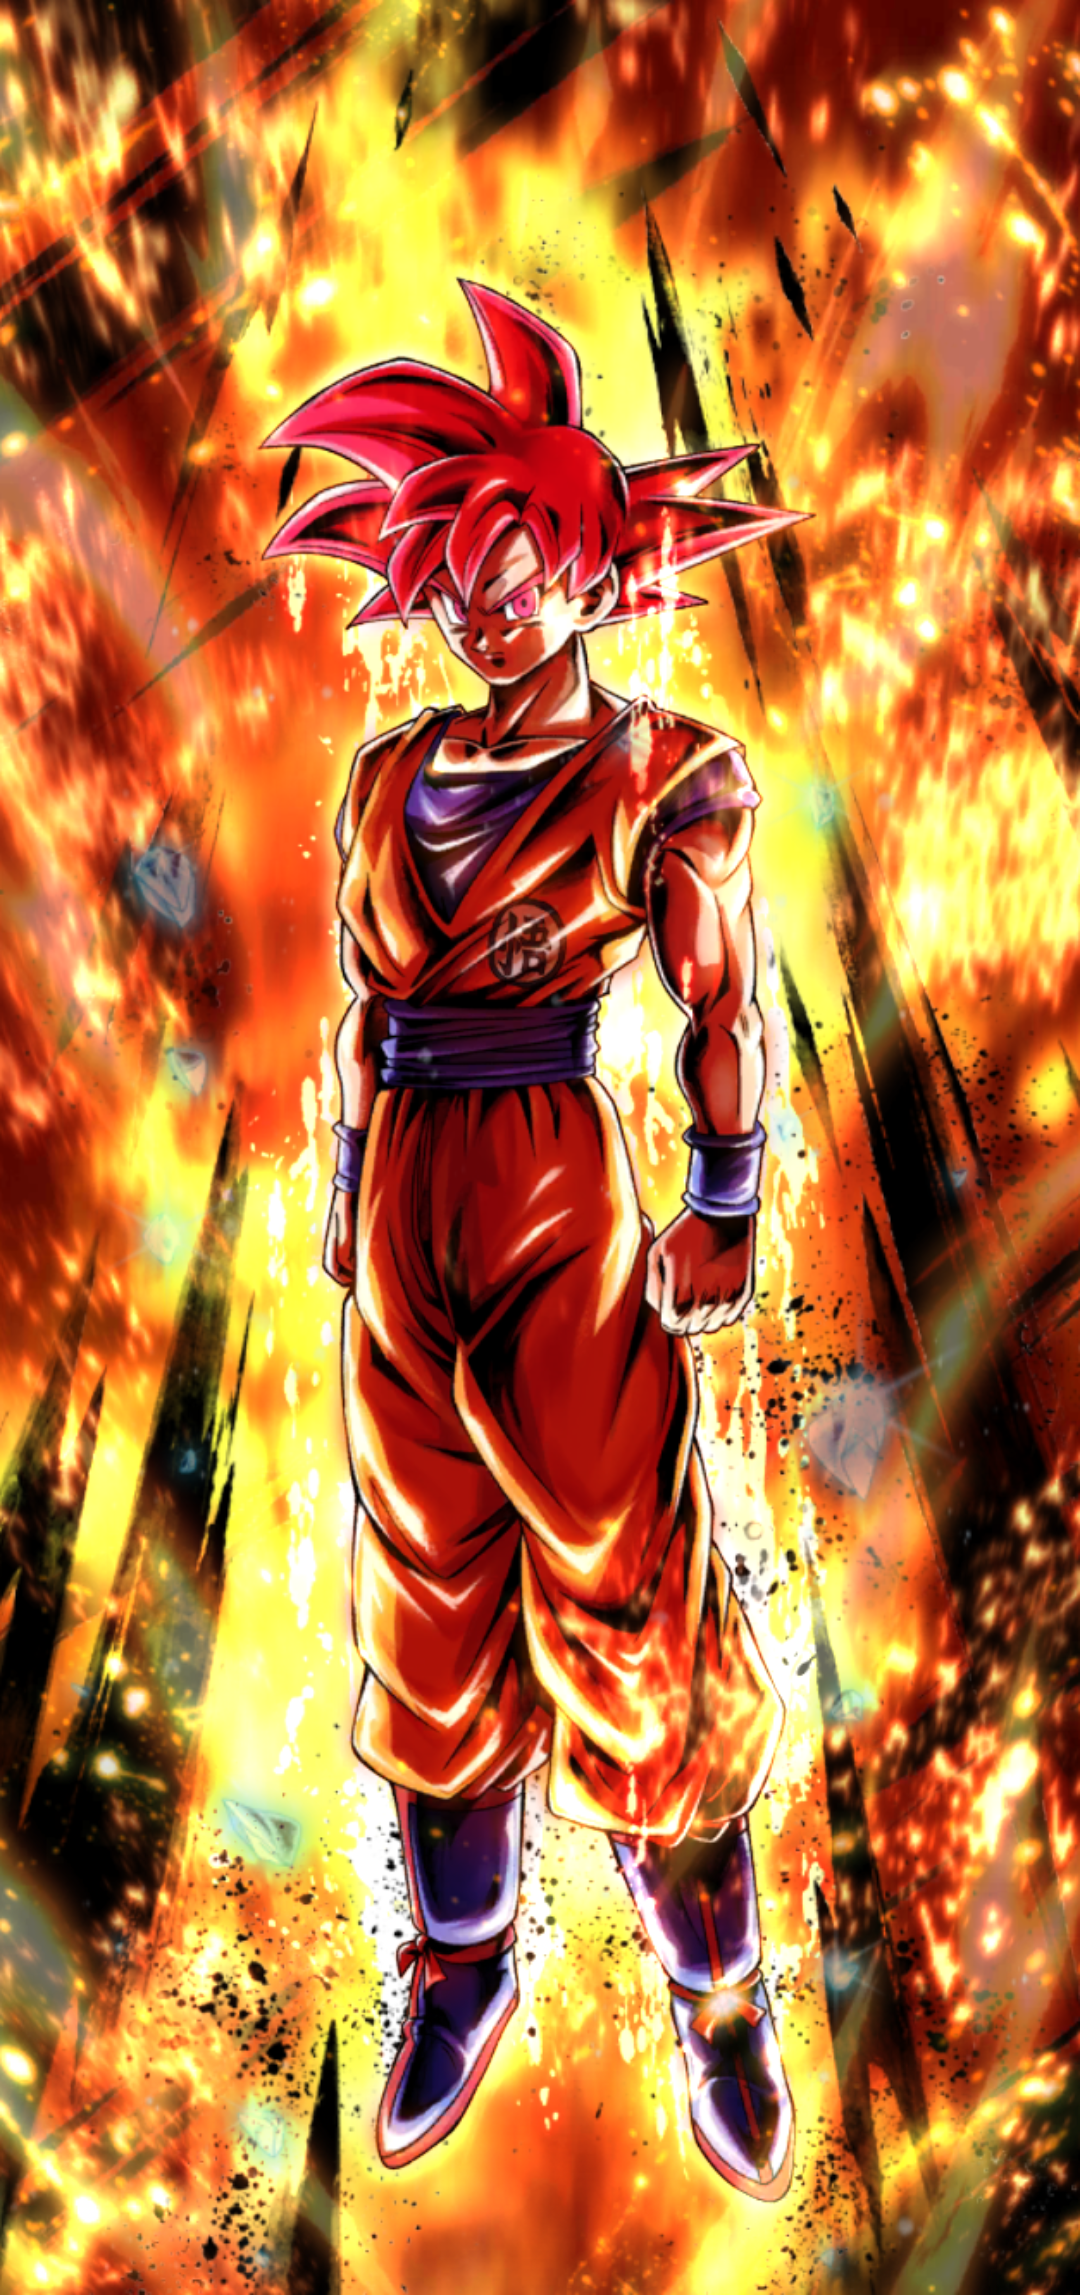 SP Super Saiyan Goku (Red)  Dragon Ball Legends Wiki - GamePress